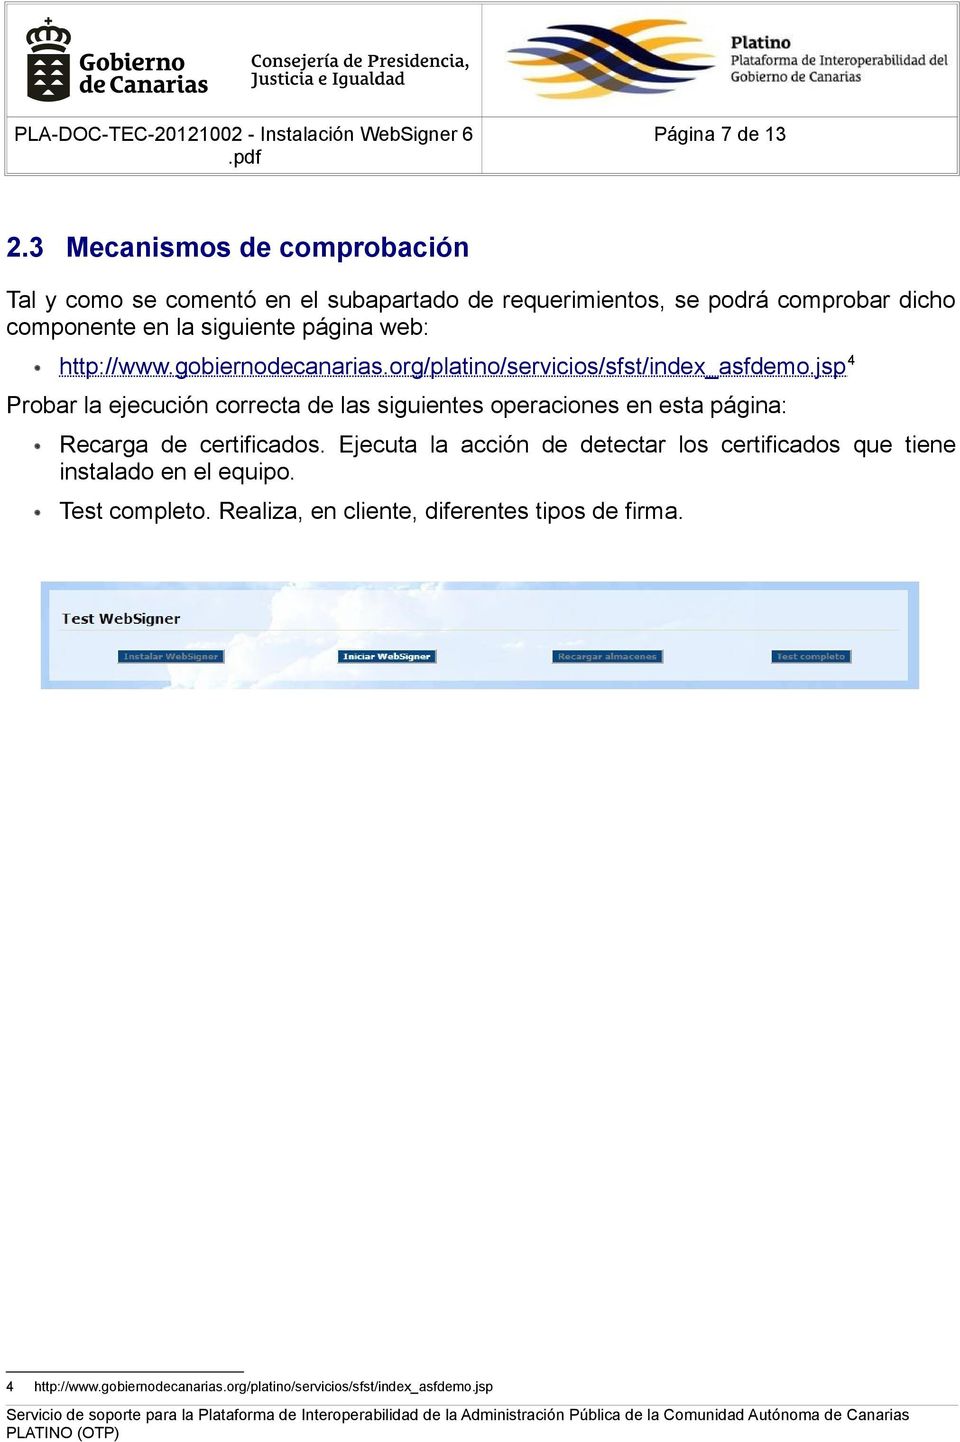 página web: http://www.gobiernodecanarias.org/platino/servicios/sfst/index_asfdemo.